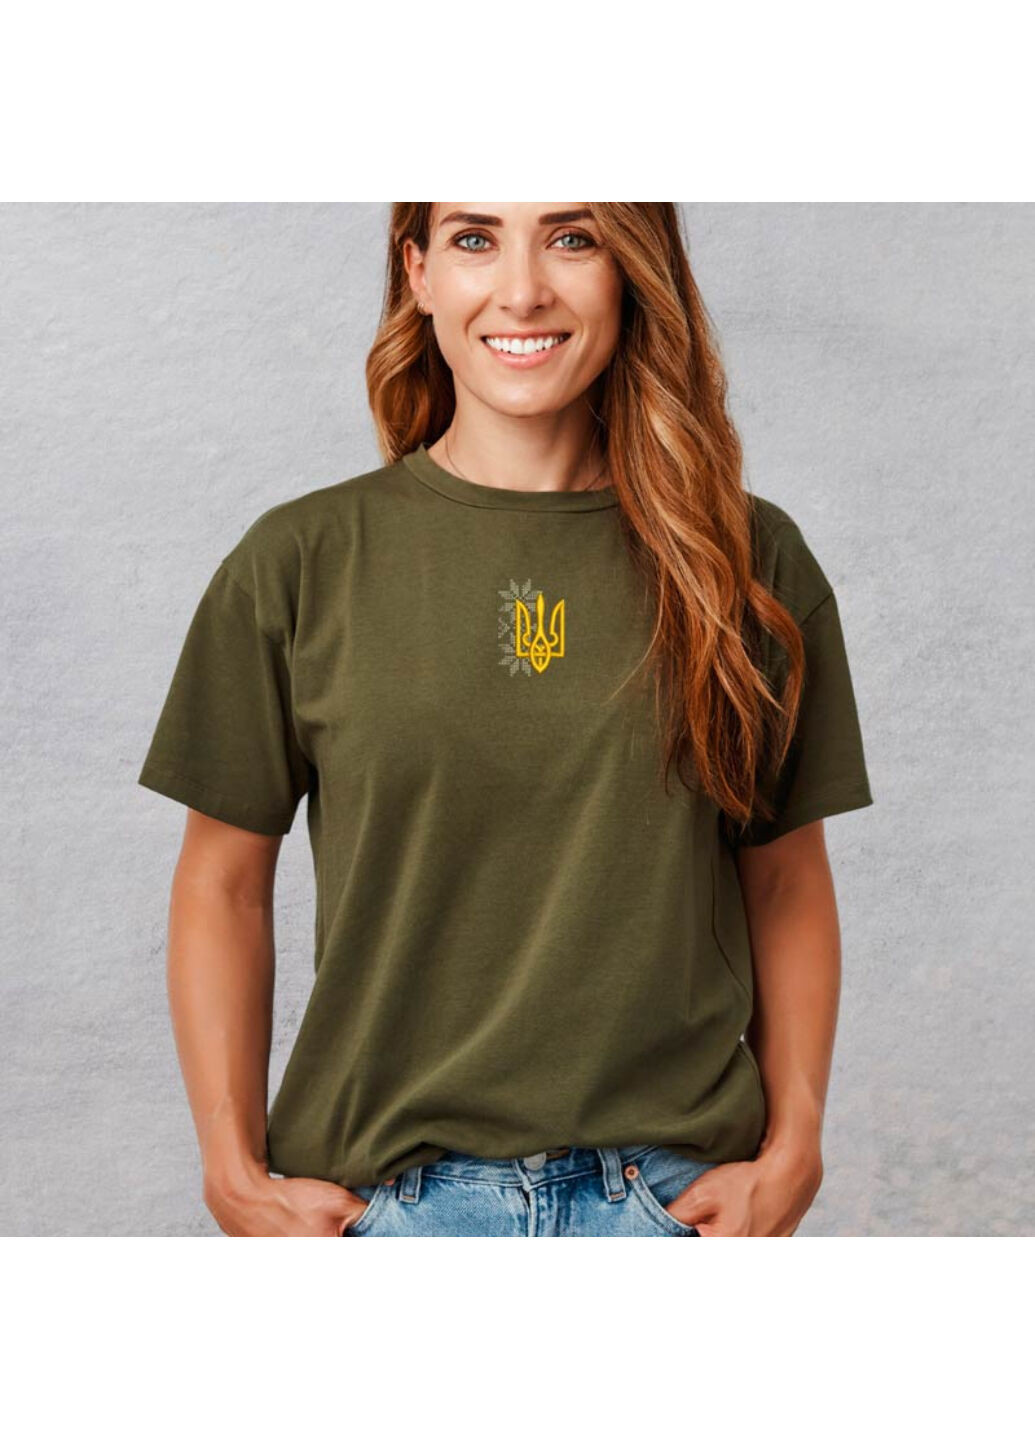 Хаки (оливковая) футболка з вишивкою тризуба 02-5 женская хаки s No Brand